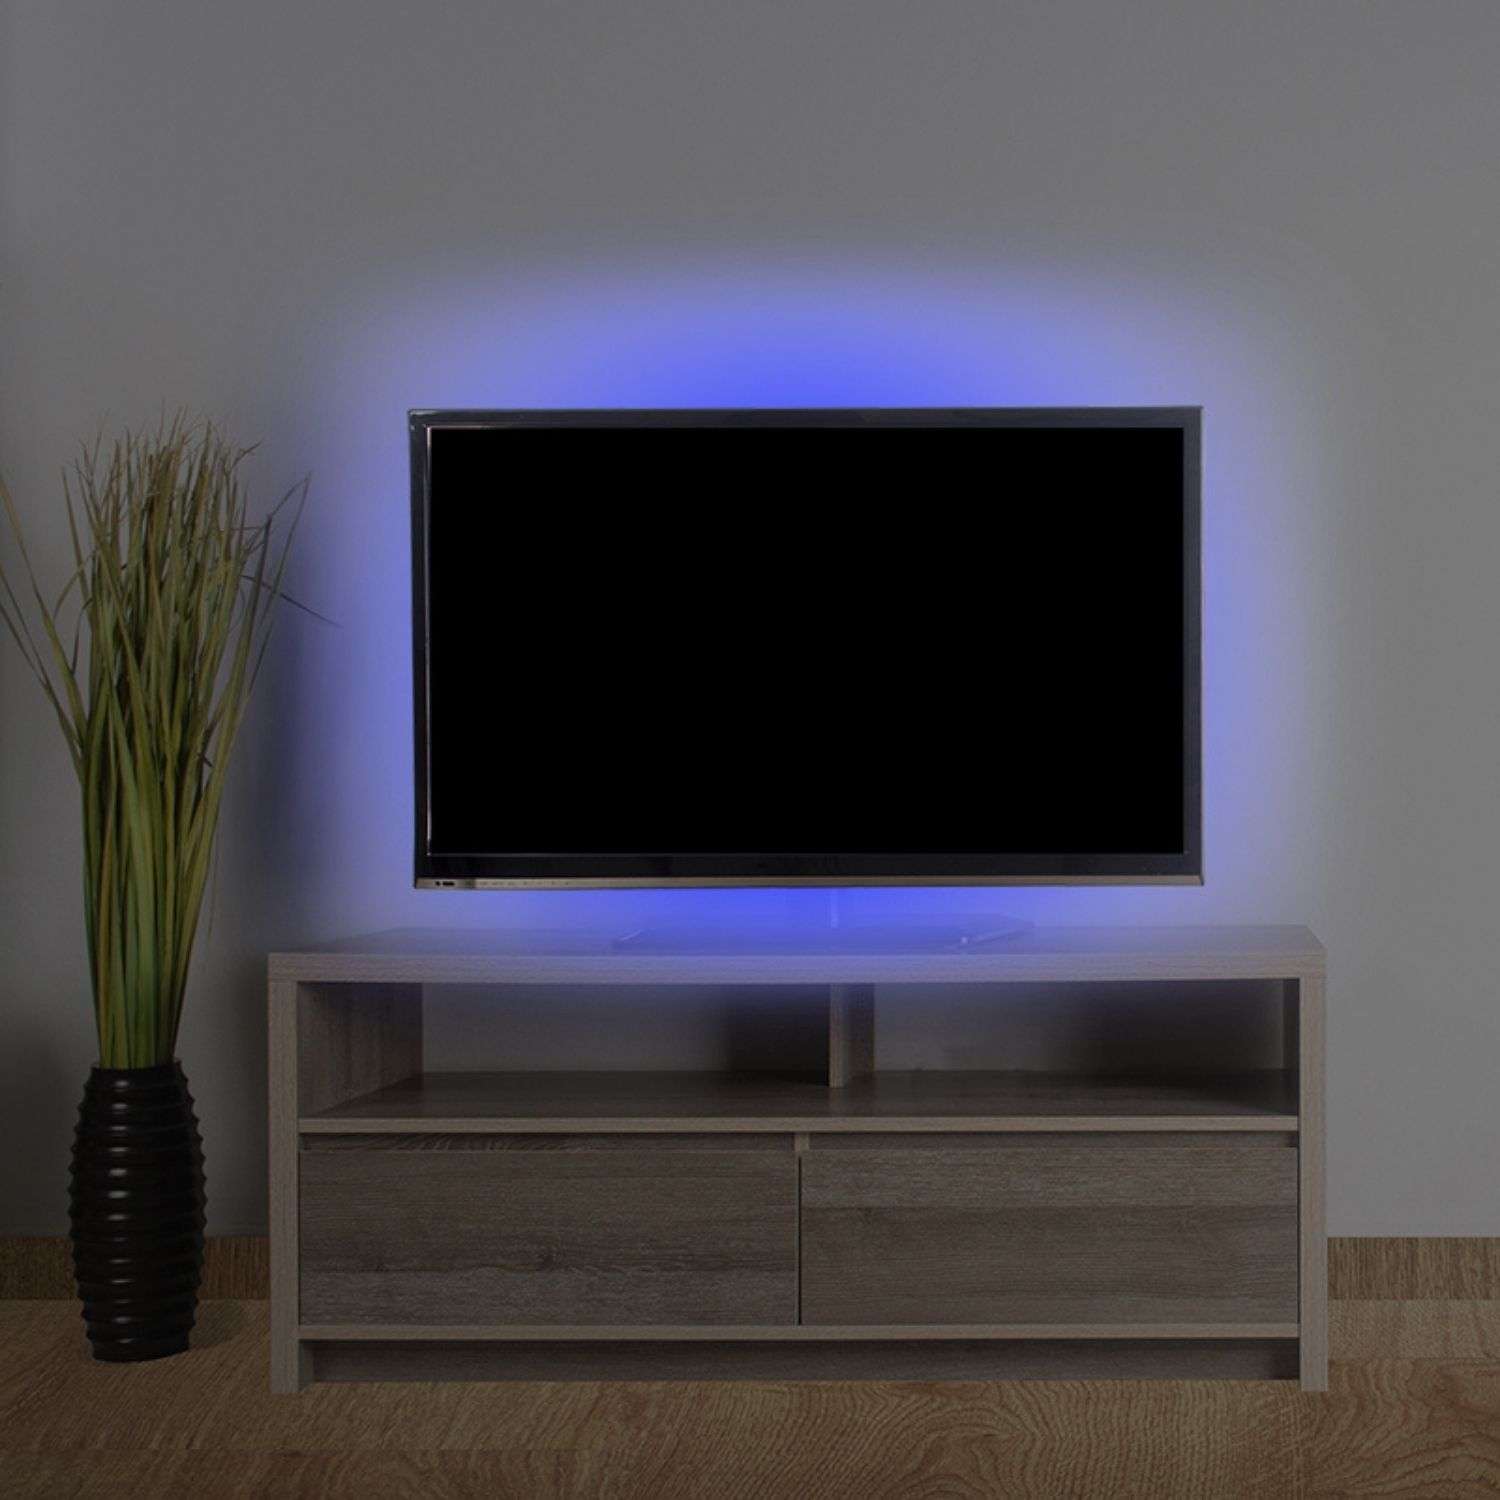 Светодиодная лента LAMPER синяя USB с клеевым основанием для подсветки телевизора и компьютера - фото 5